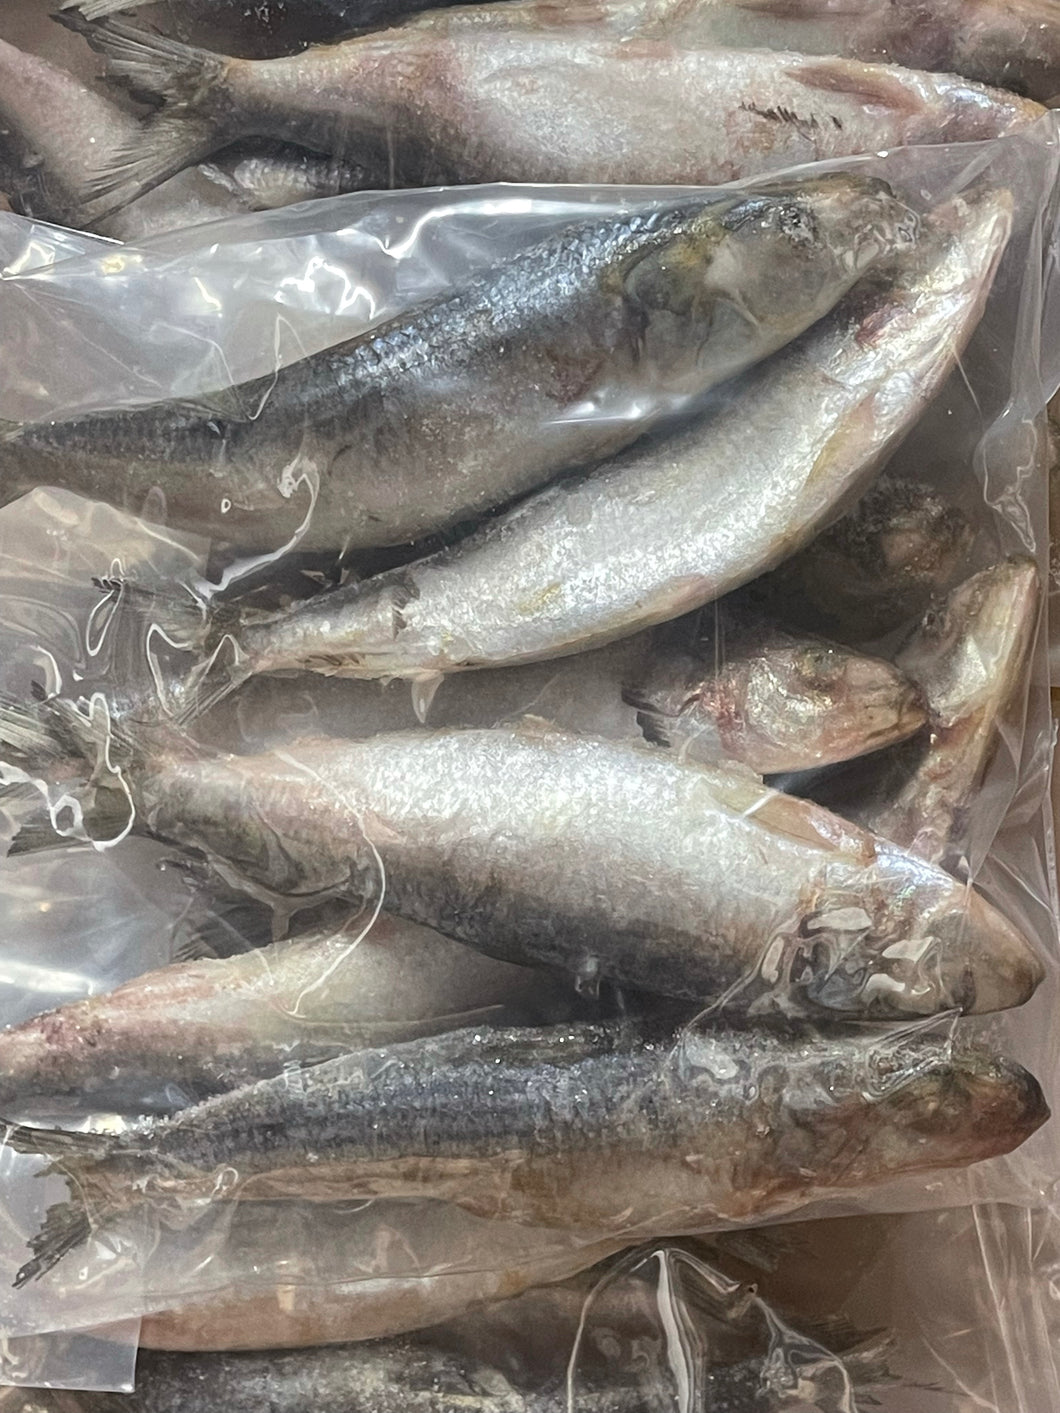 Sardines, Fresh Fish Whole Prey